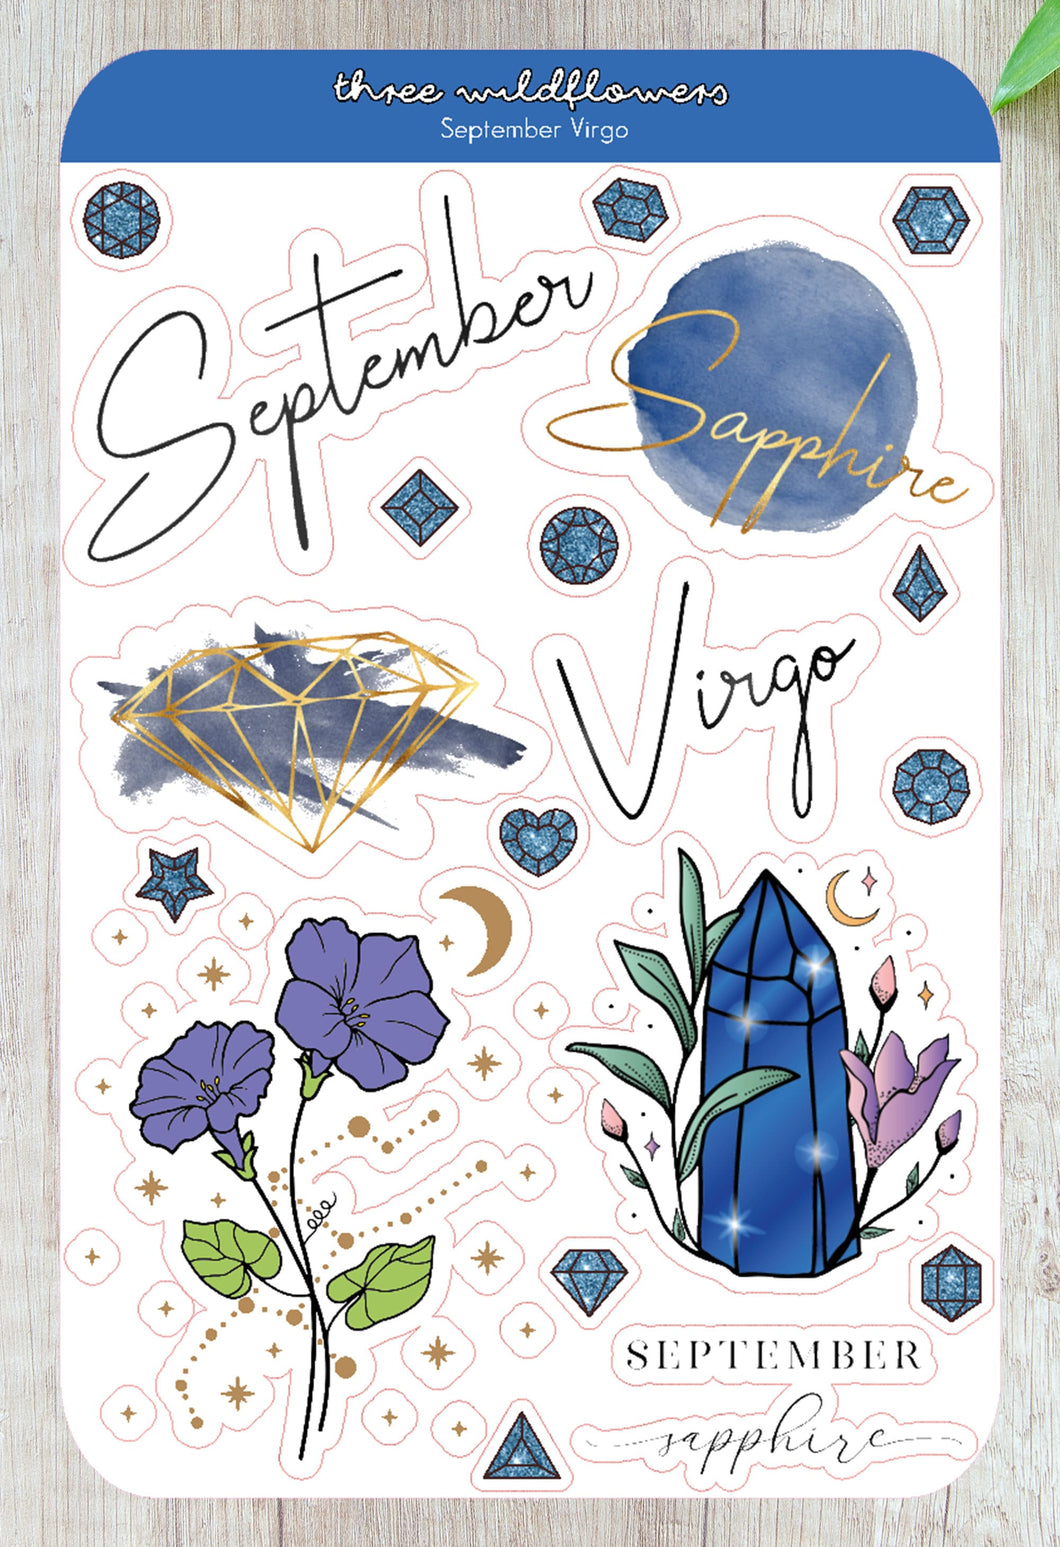 September Virgo Stickers - September Birthday Sticker - Morning Glory Stickers - Sspphire Birthstone Sticker